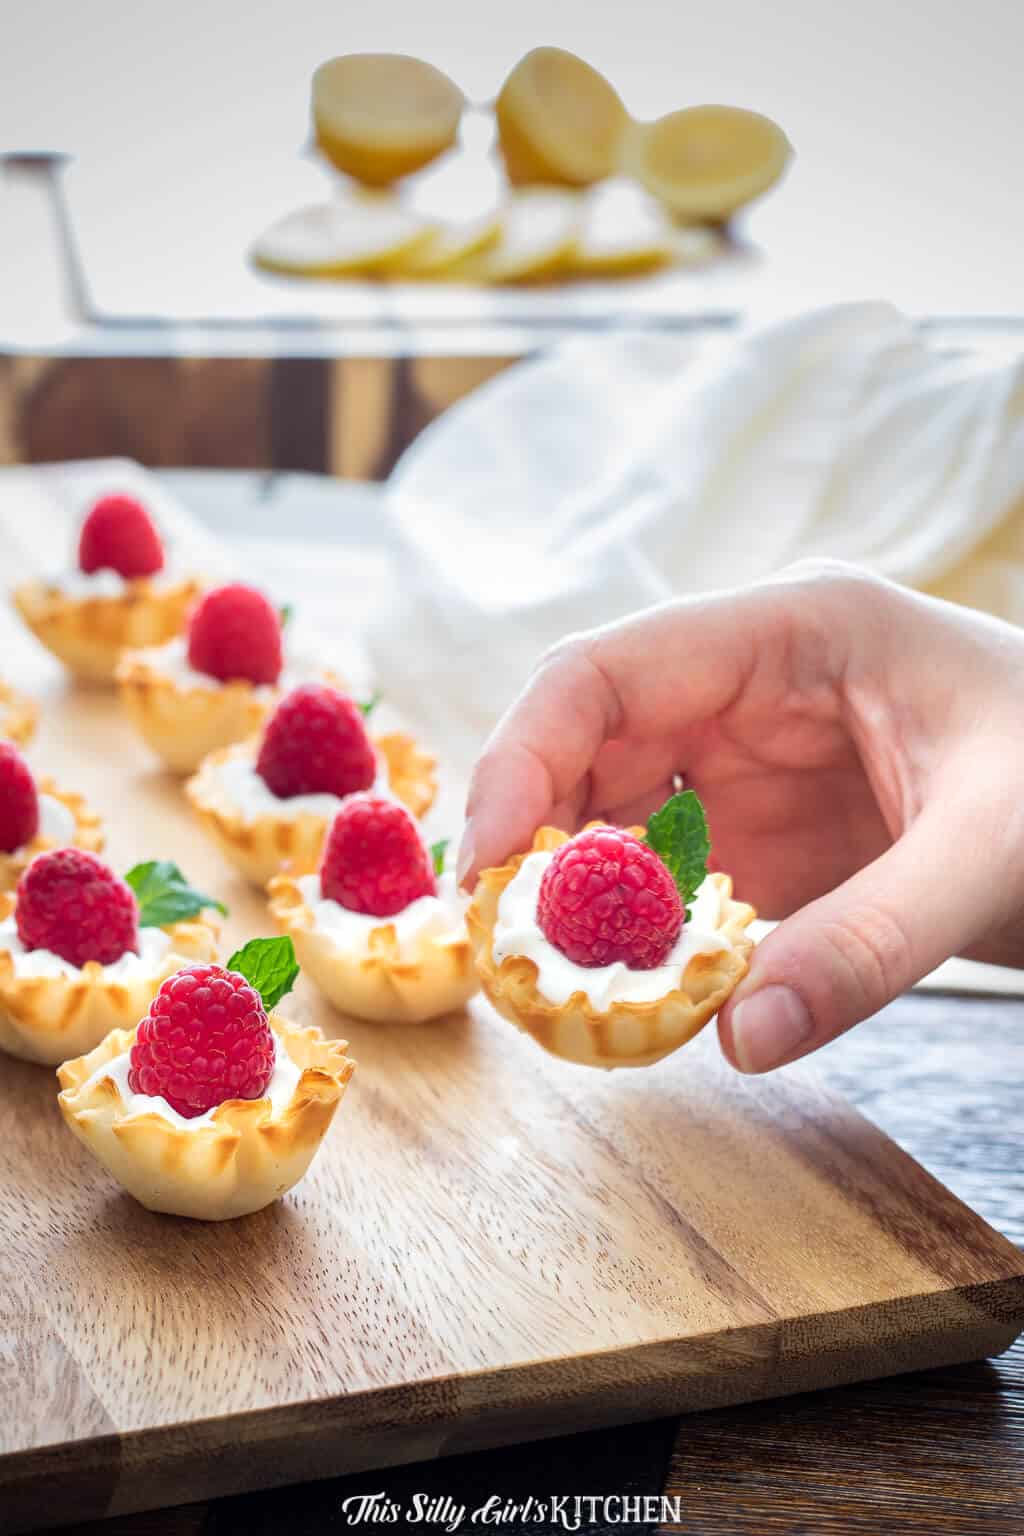 Raspberry Dessert Cups, a simple and easy make-ahead dessert perfect for entertaining! #recipe from thissillygirlskitchen.com #raspberry #dessert #raspberrydessert #whippedcream #lemon #raspberrylemon #raspberrydessertcups